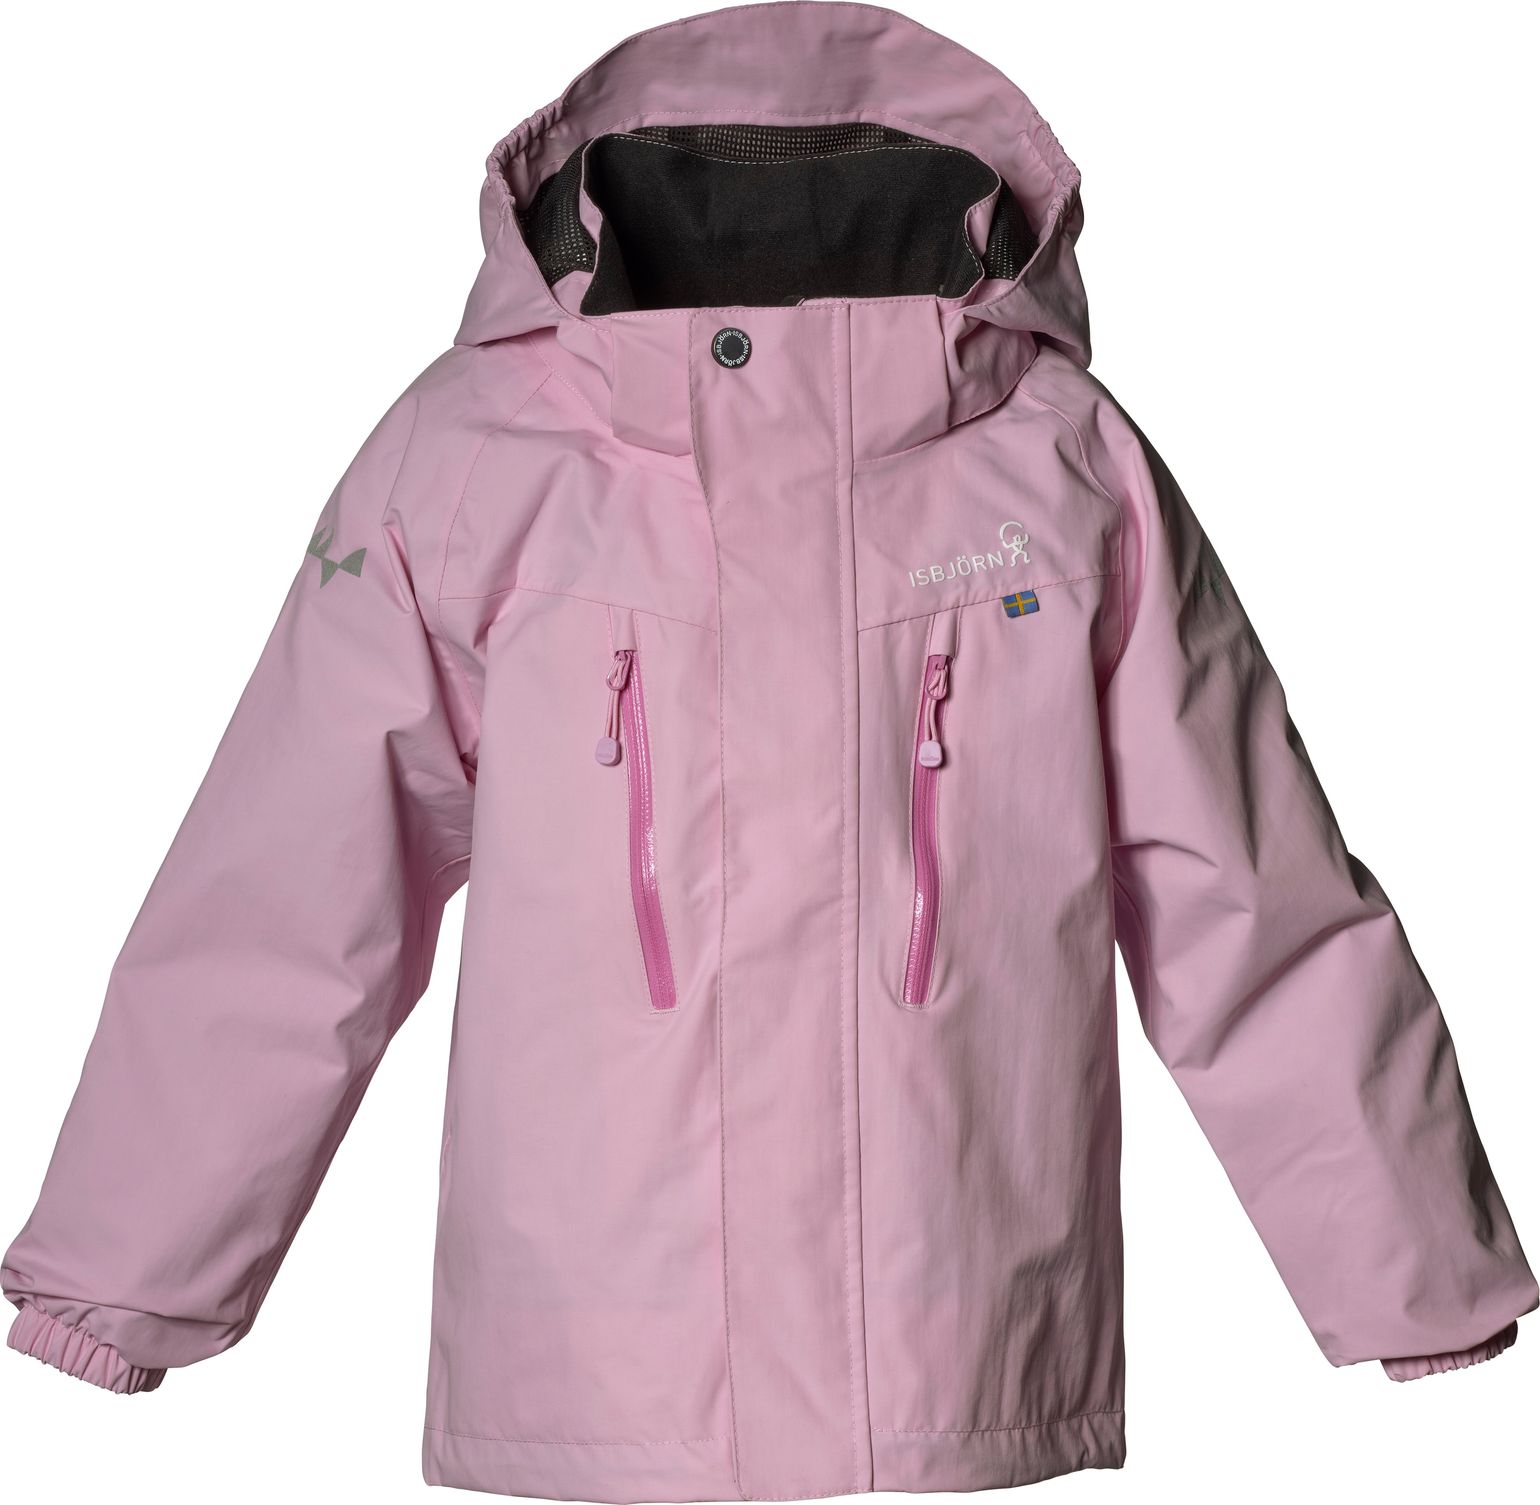 Kids' Storm Hard Shell Jacket Frost Pink